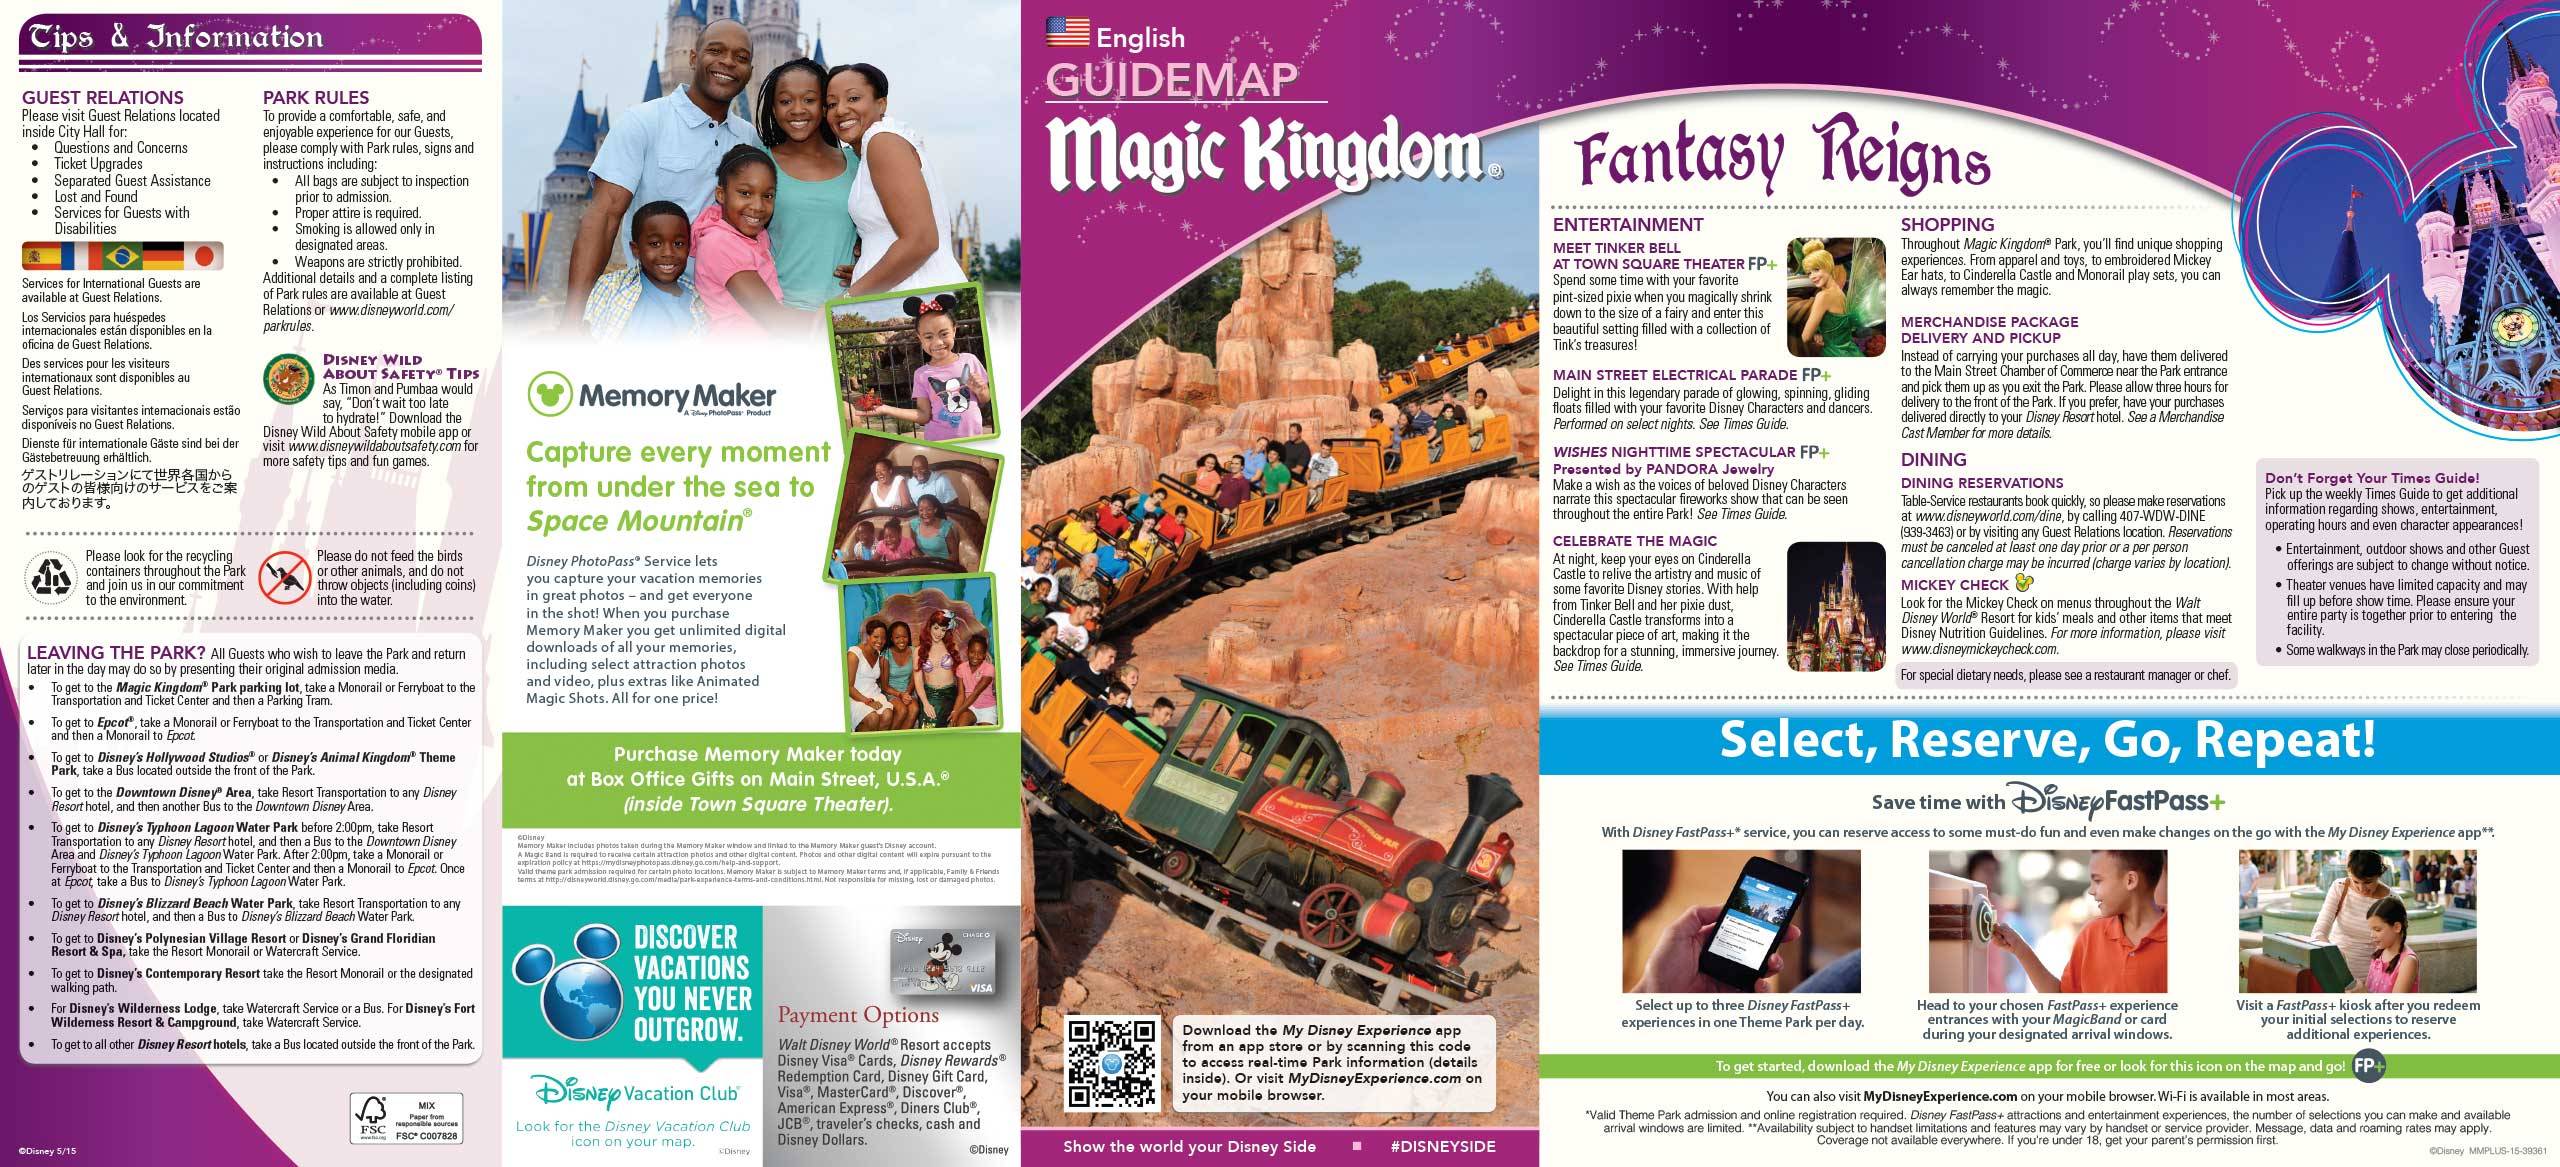 Magic Kingdom Guide Map May 2015 - Front